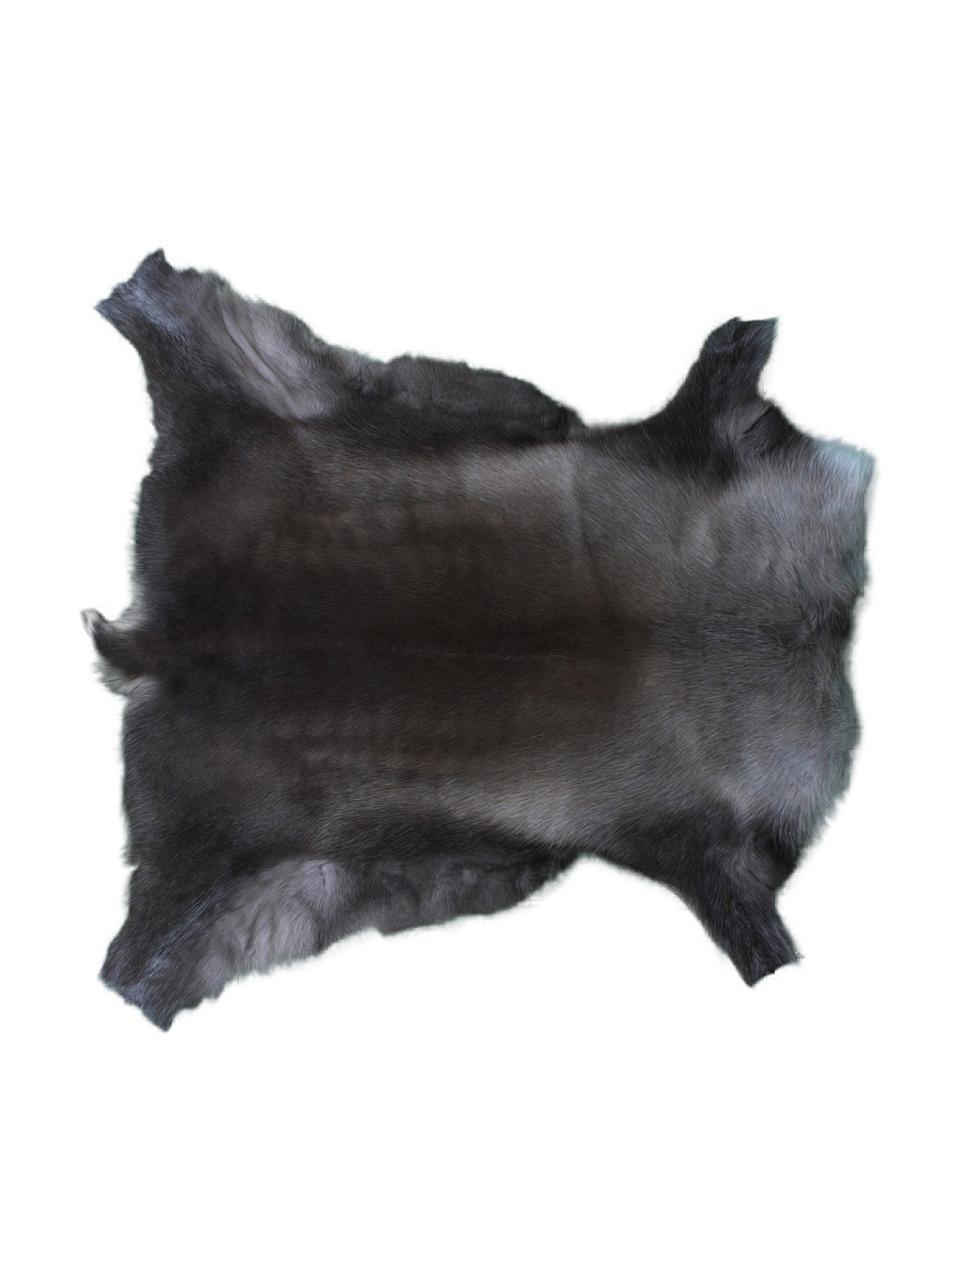 Tappeto in pelle di renna Berndo, Pelle di renna, Tonalità marroni, Pelle di renna unica 232, 75 x 115 cm